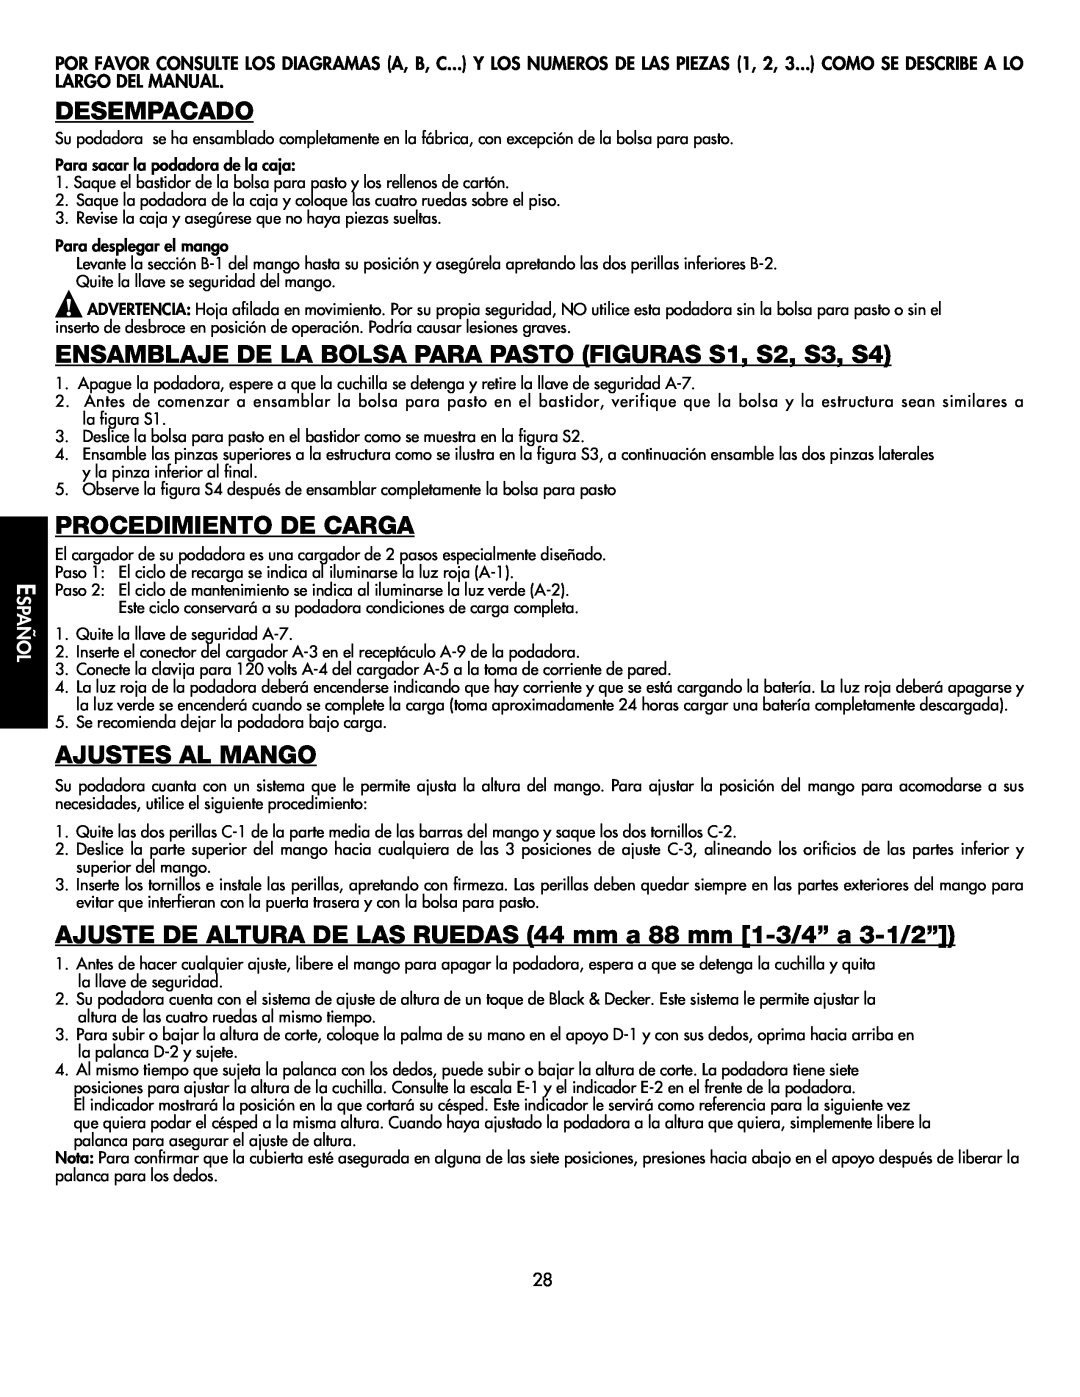 Black & Decker CMM1000 Desempacado, ENSAMBLAJE DE LA BOLSA PARA PASTO FIGURAS S1, S2, S3, S4, Procedimiento De Carga 